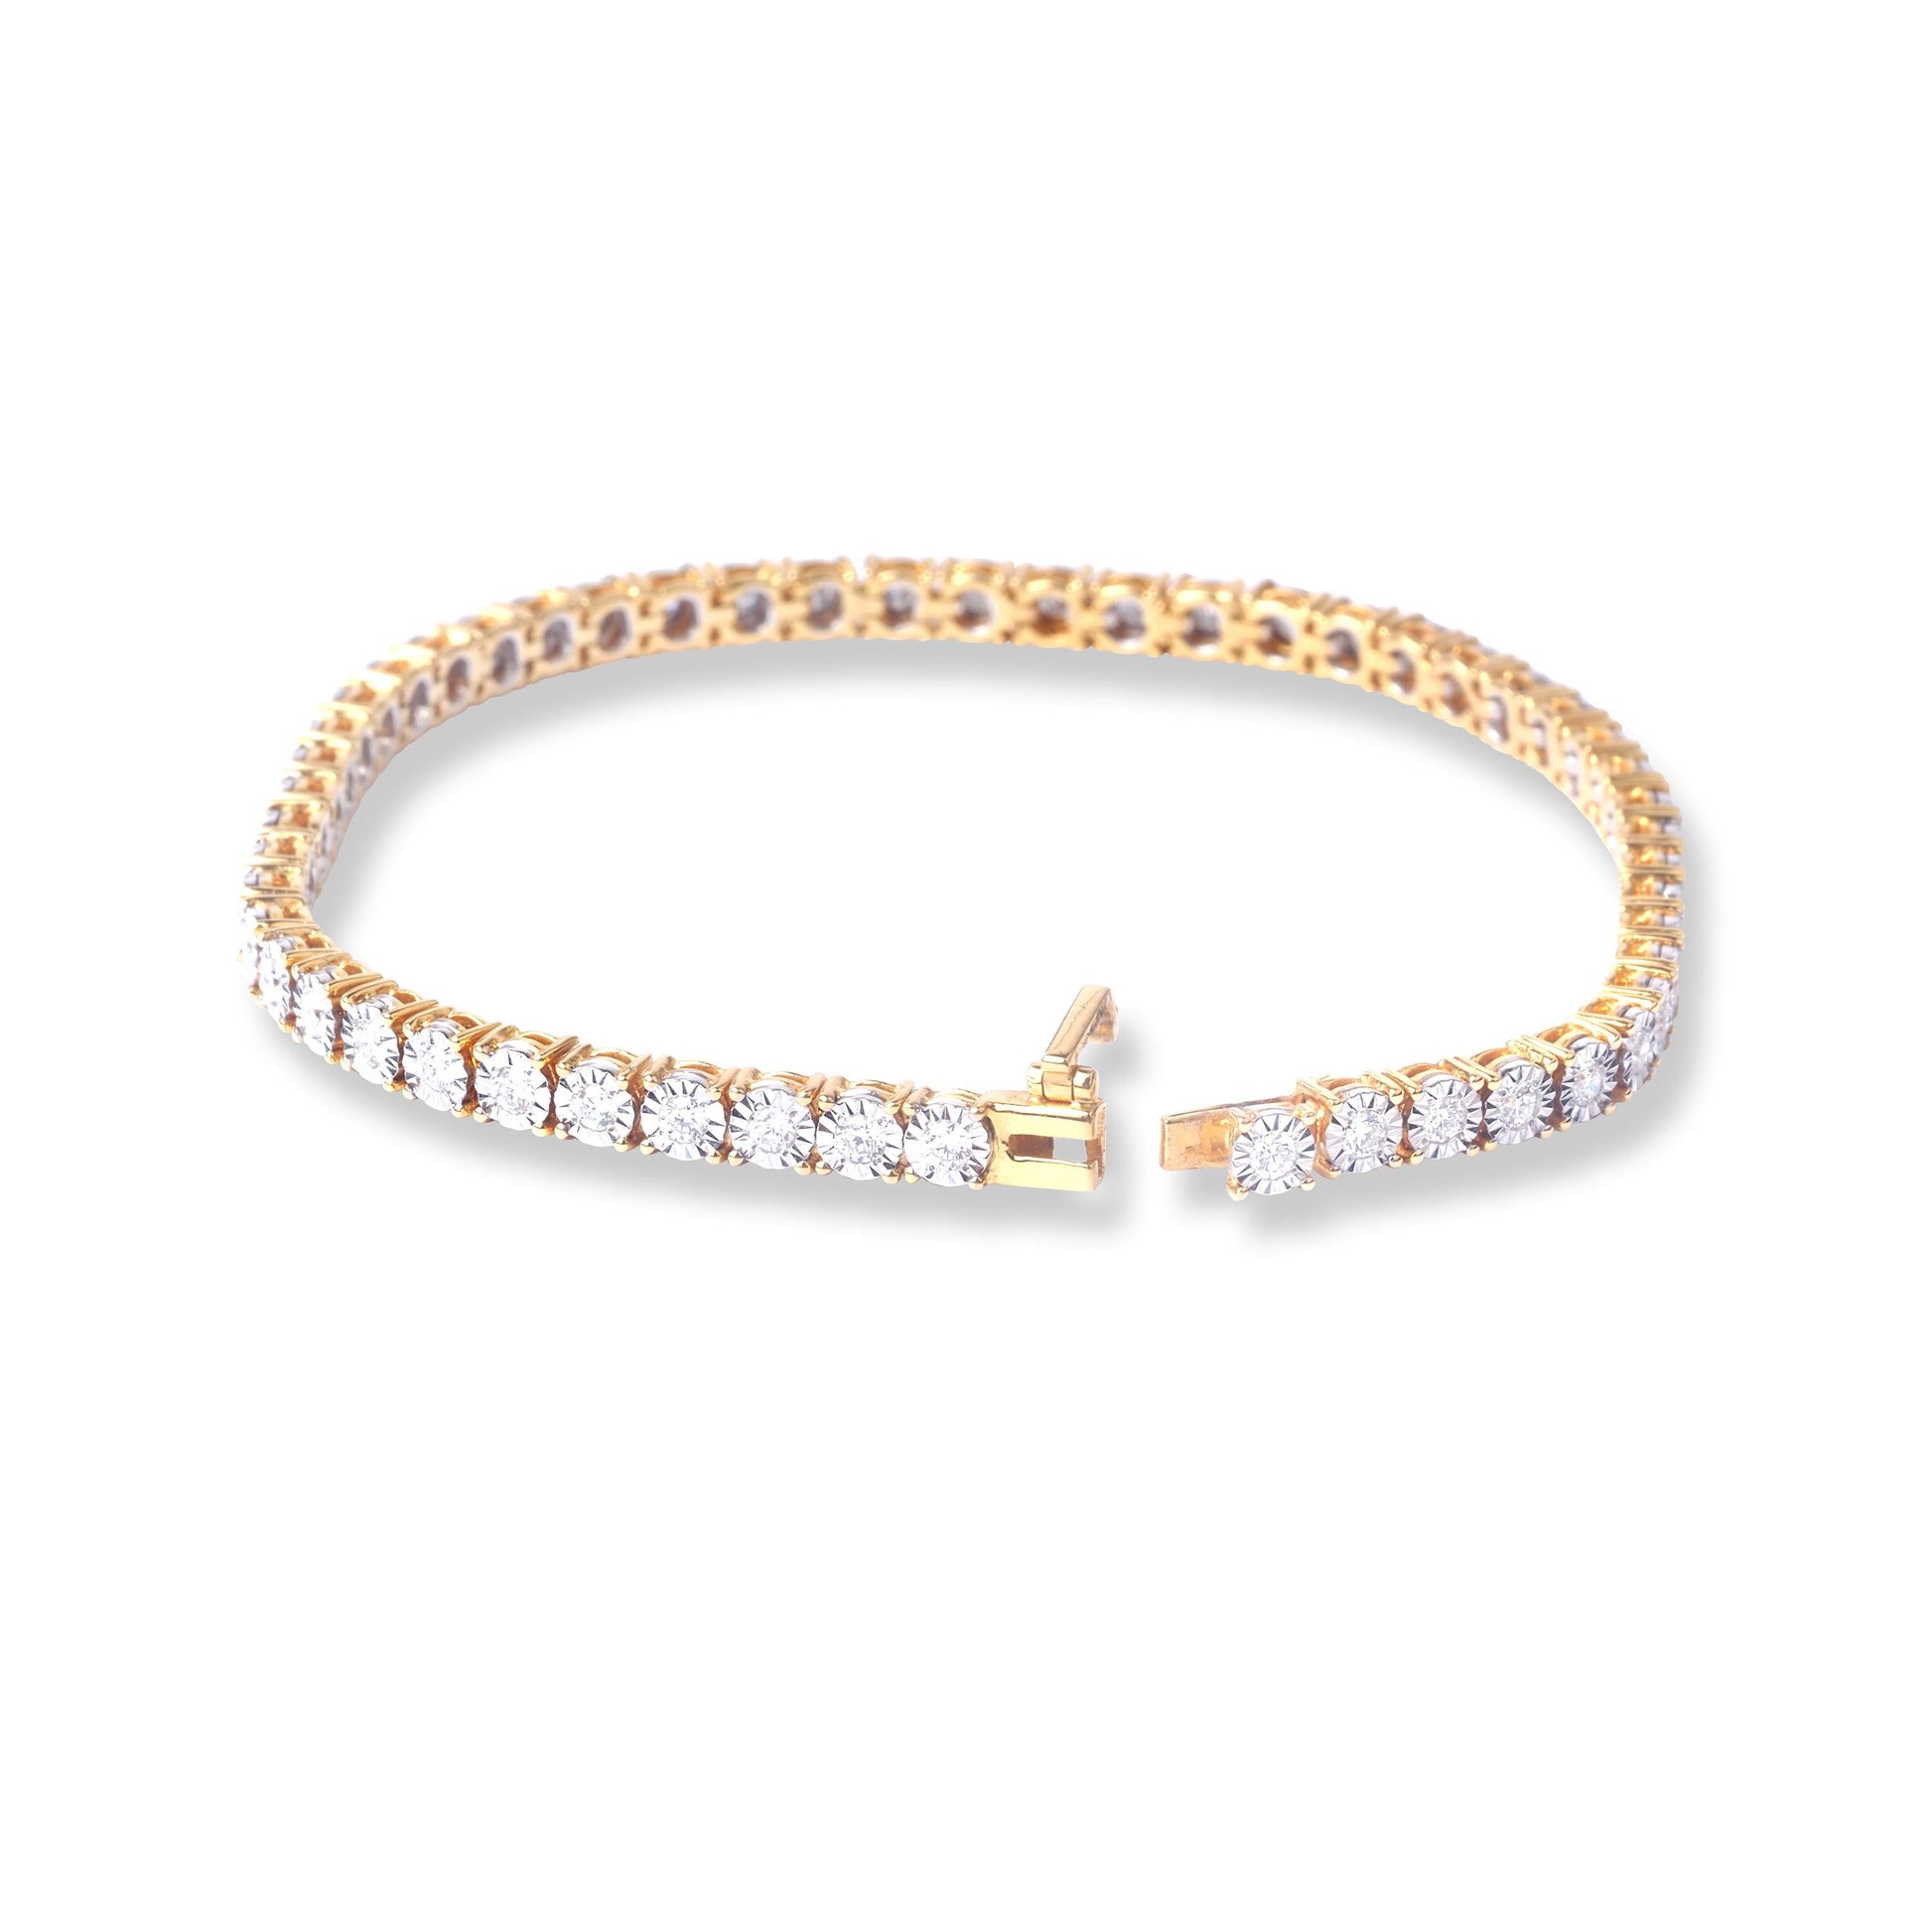 18ct Yellow Gold Diamond Tennis Bracelet with Box Clasp MCS4852 - Minar Jewellers